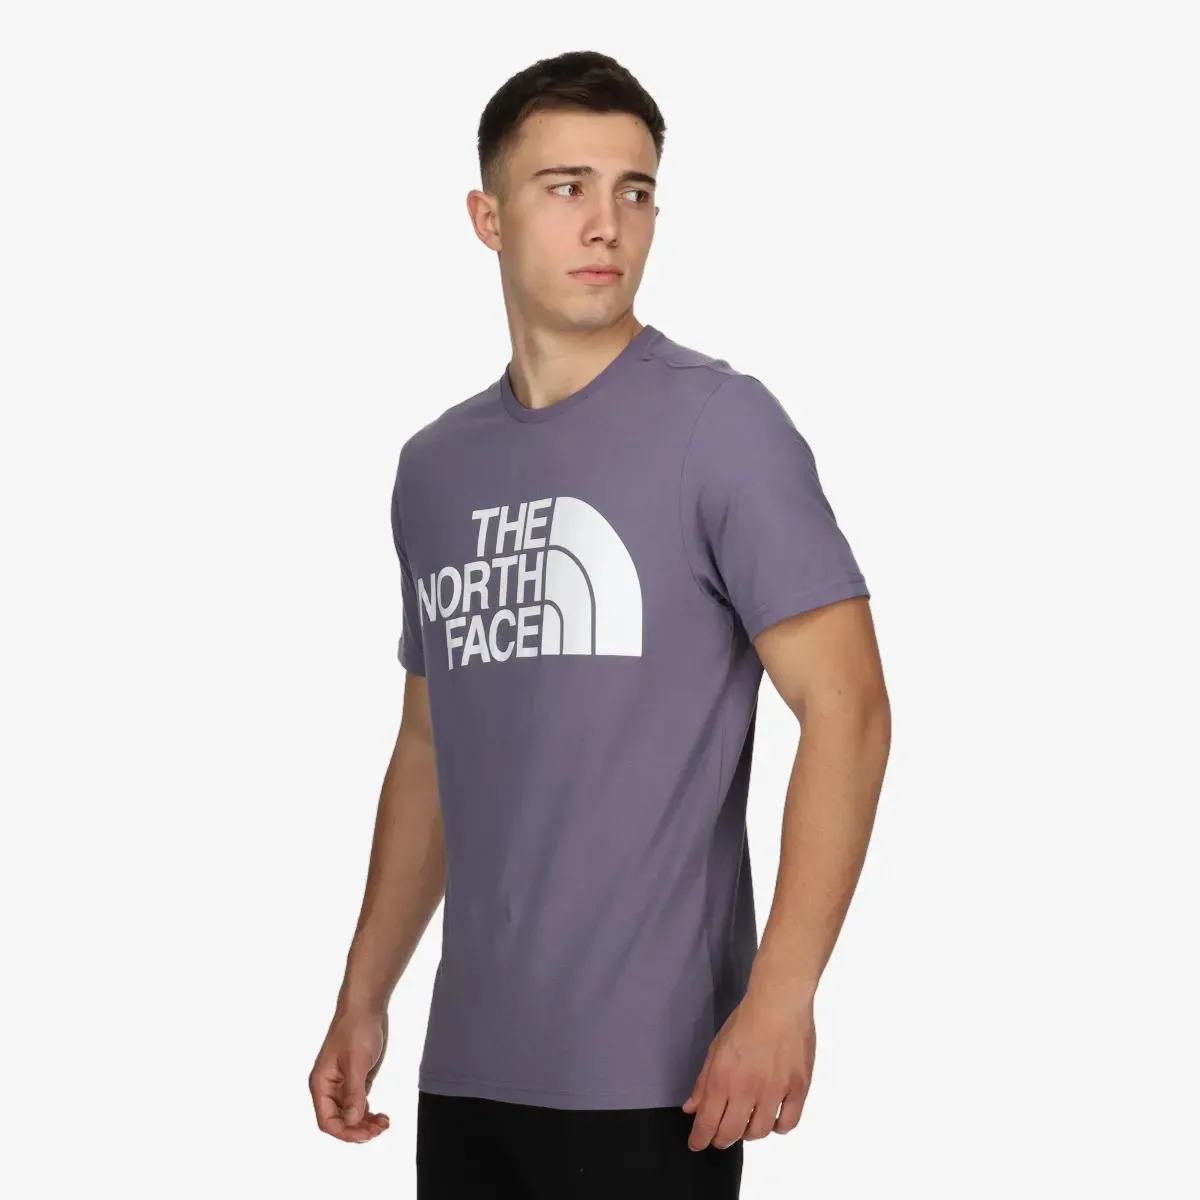 The North Face T-shirt Men’s Standard Ss Tee 